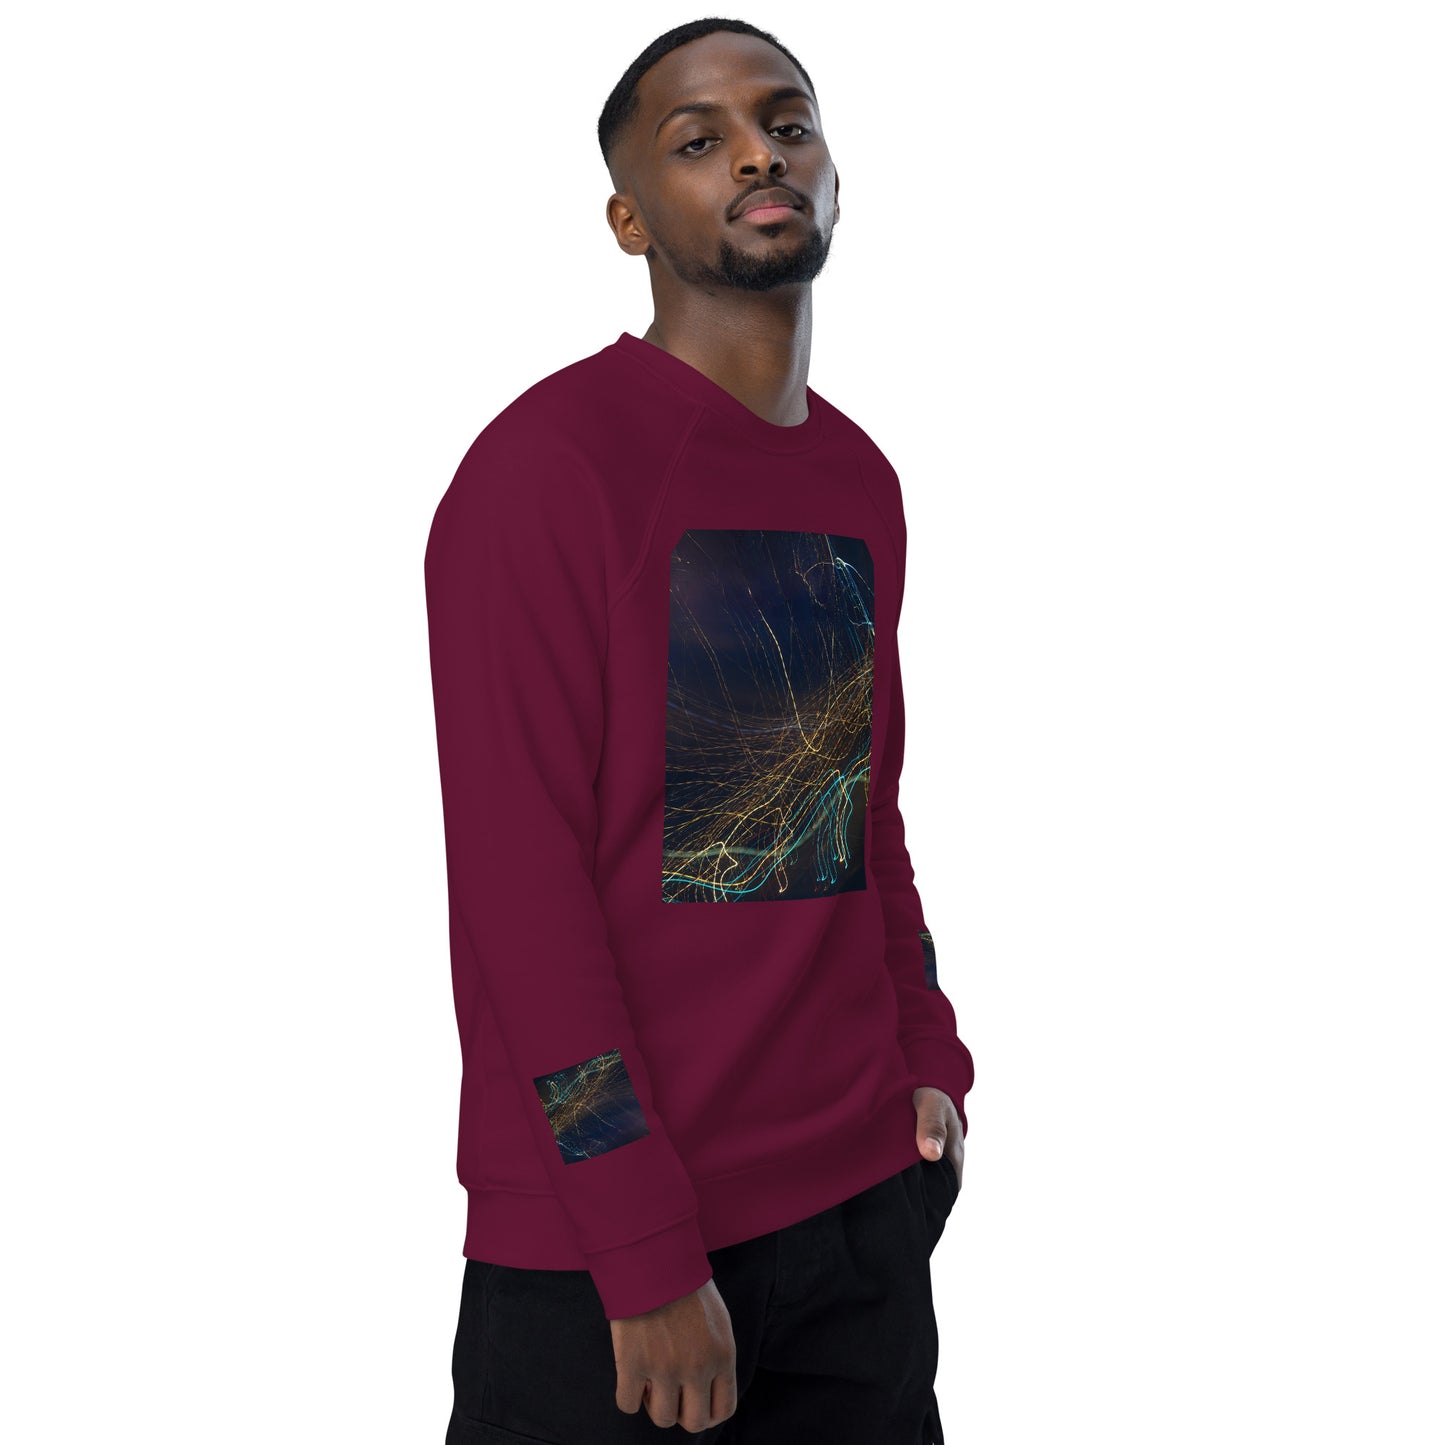 Eco-Chic Unisex Raglan Sweatshirt with Abstract Design - Shop Now!